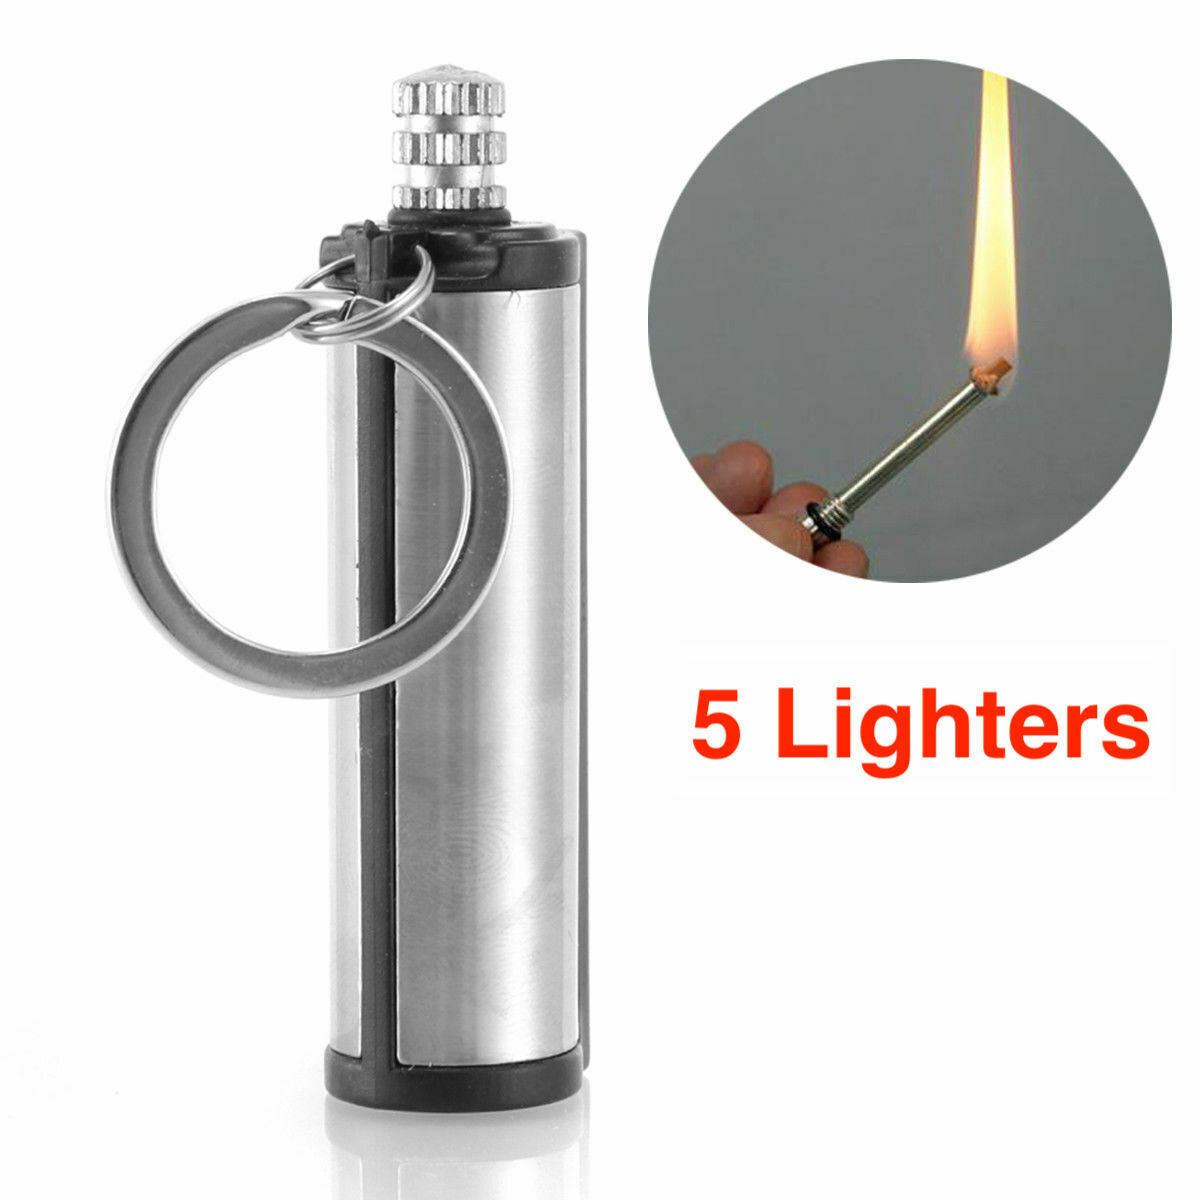 Waterproof Match Permanent Lighter Striker Fire Starter Emergency Survival 5 LOT